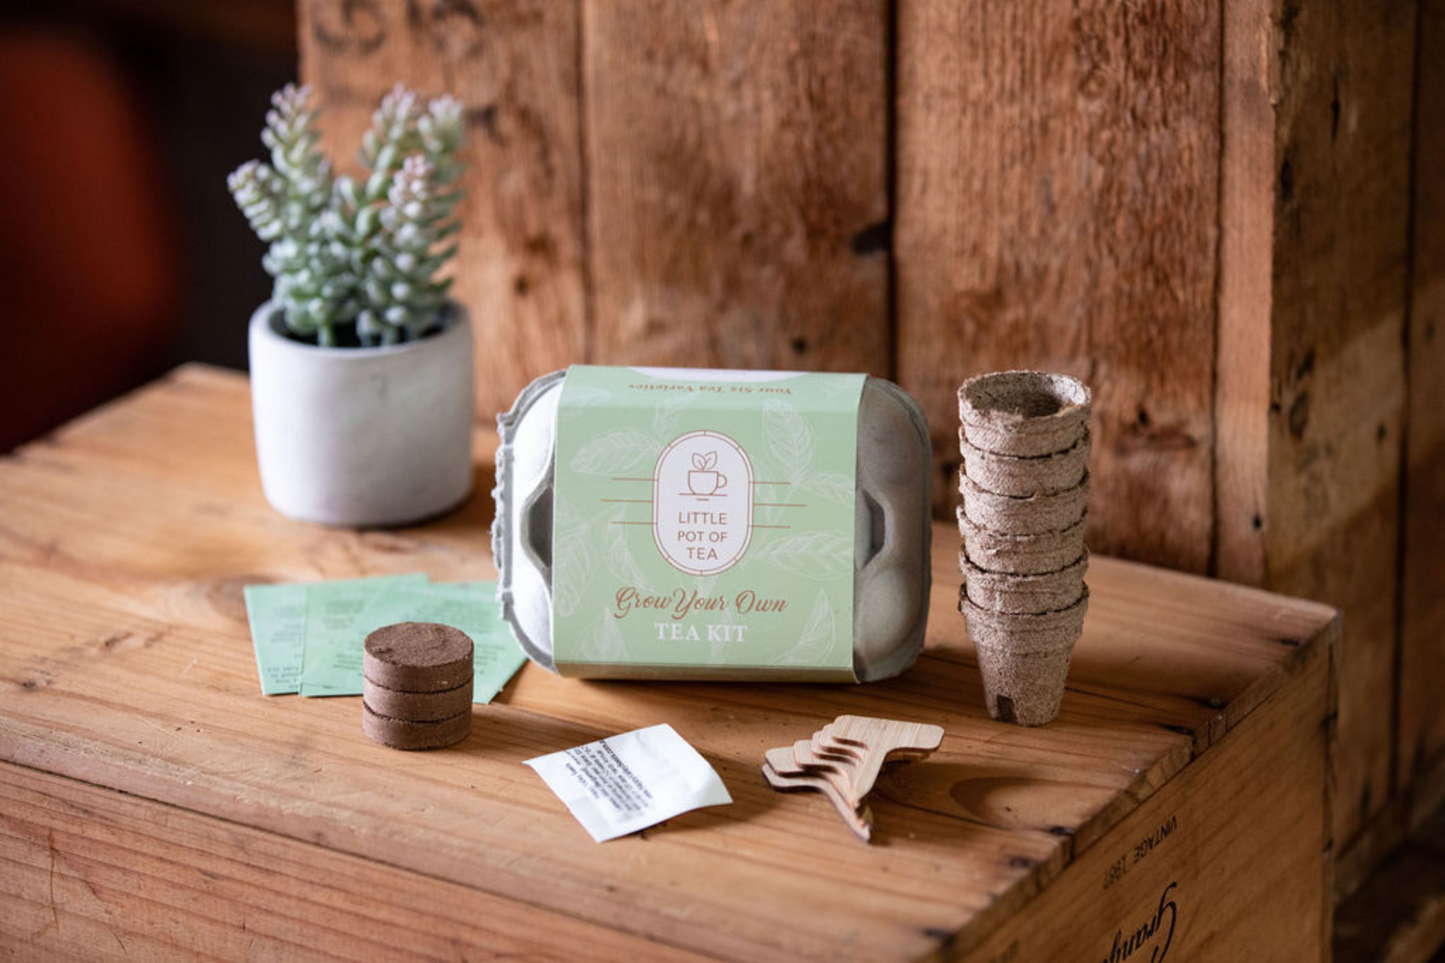 Little Pot of Tea - Grow Your Own Tea Kit